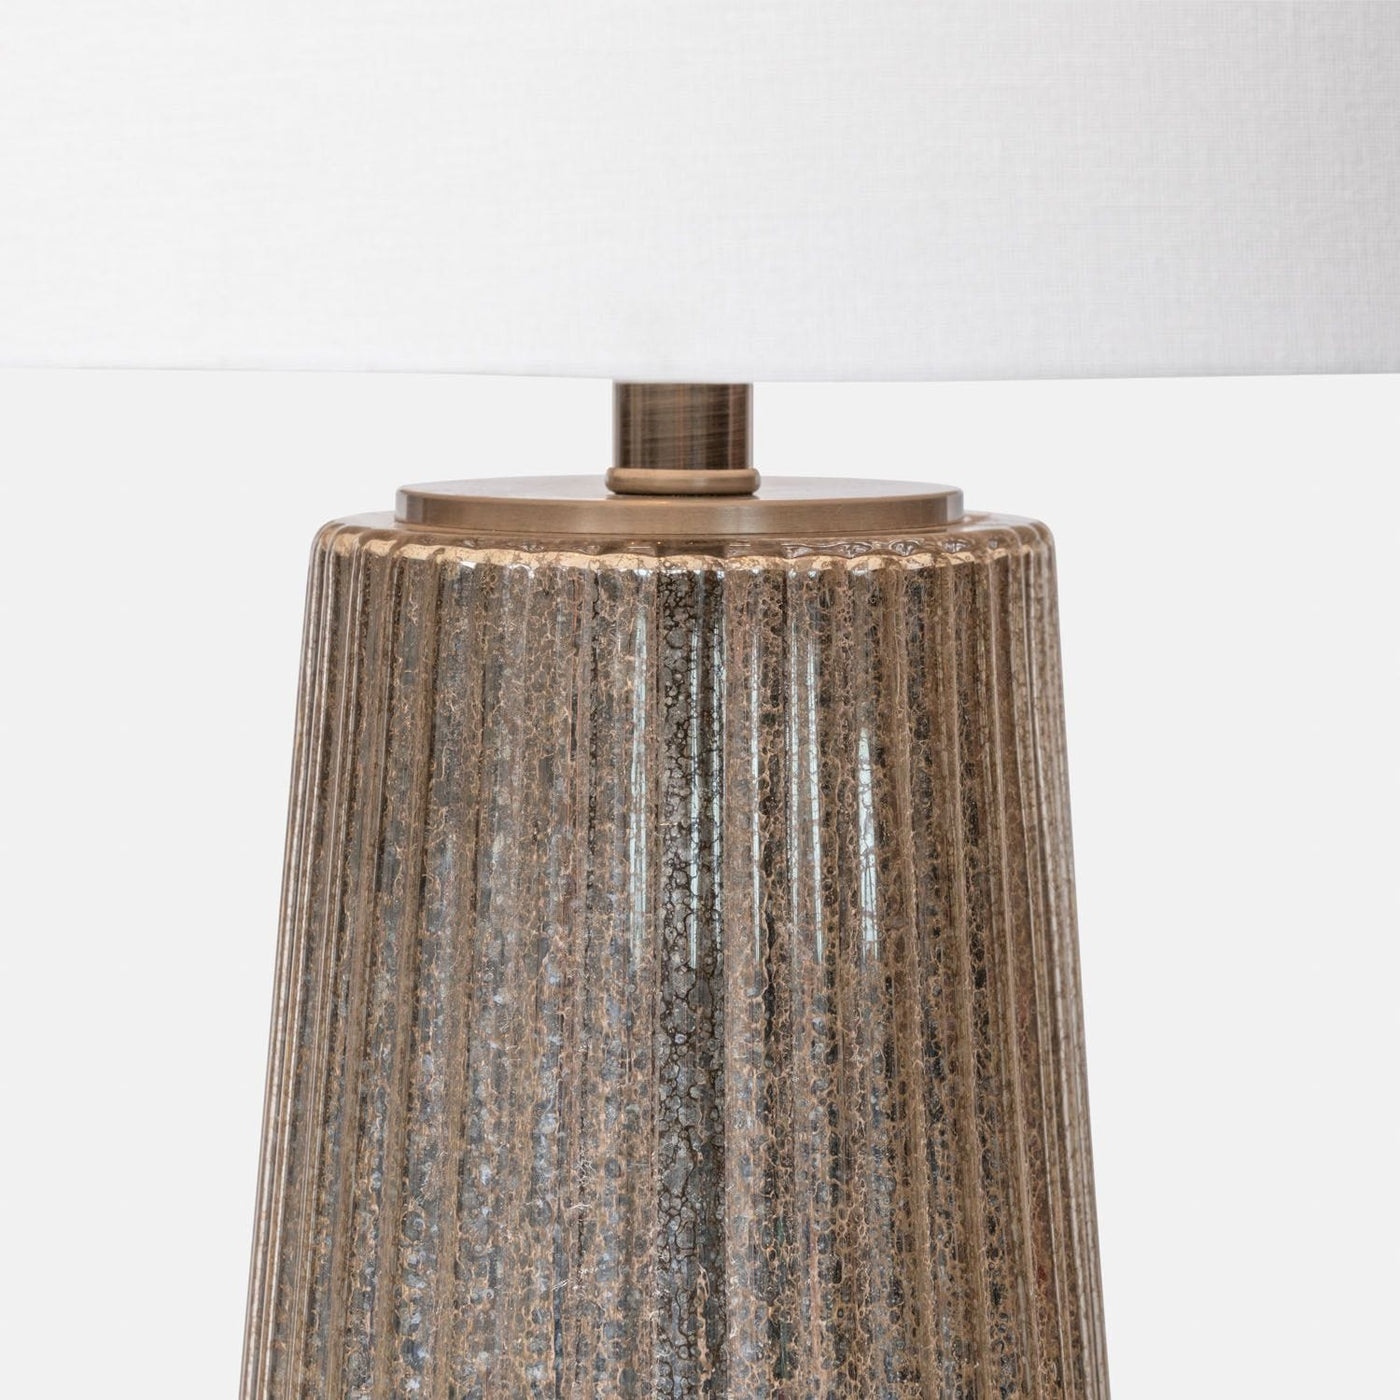 TABLE LAMP TAPERED COLUMN MERCURY GLASS